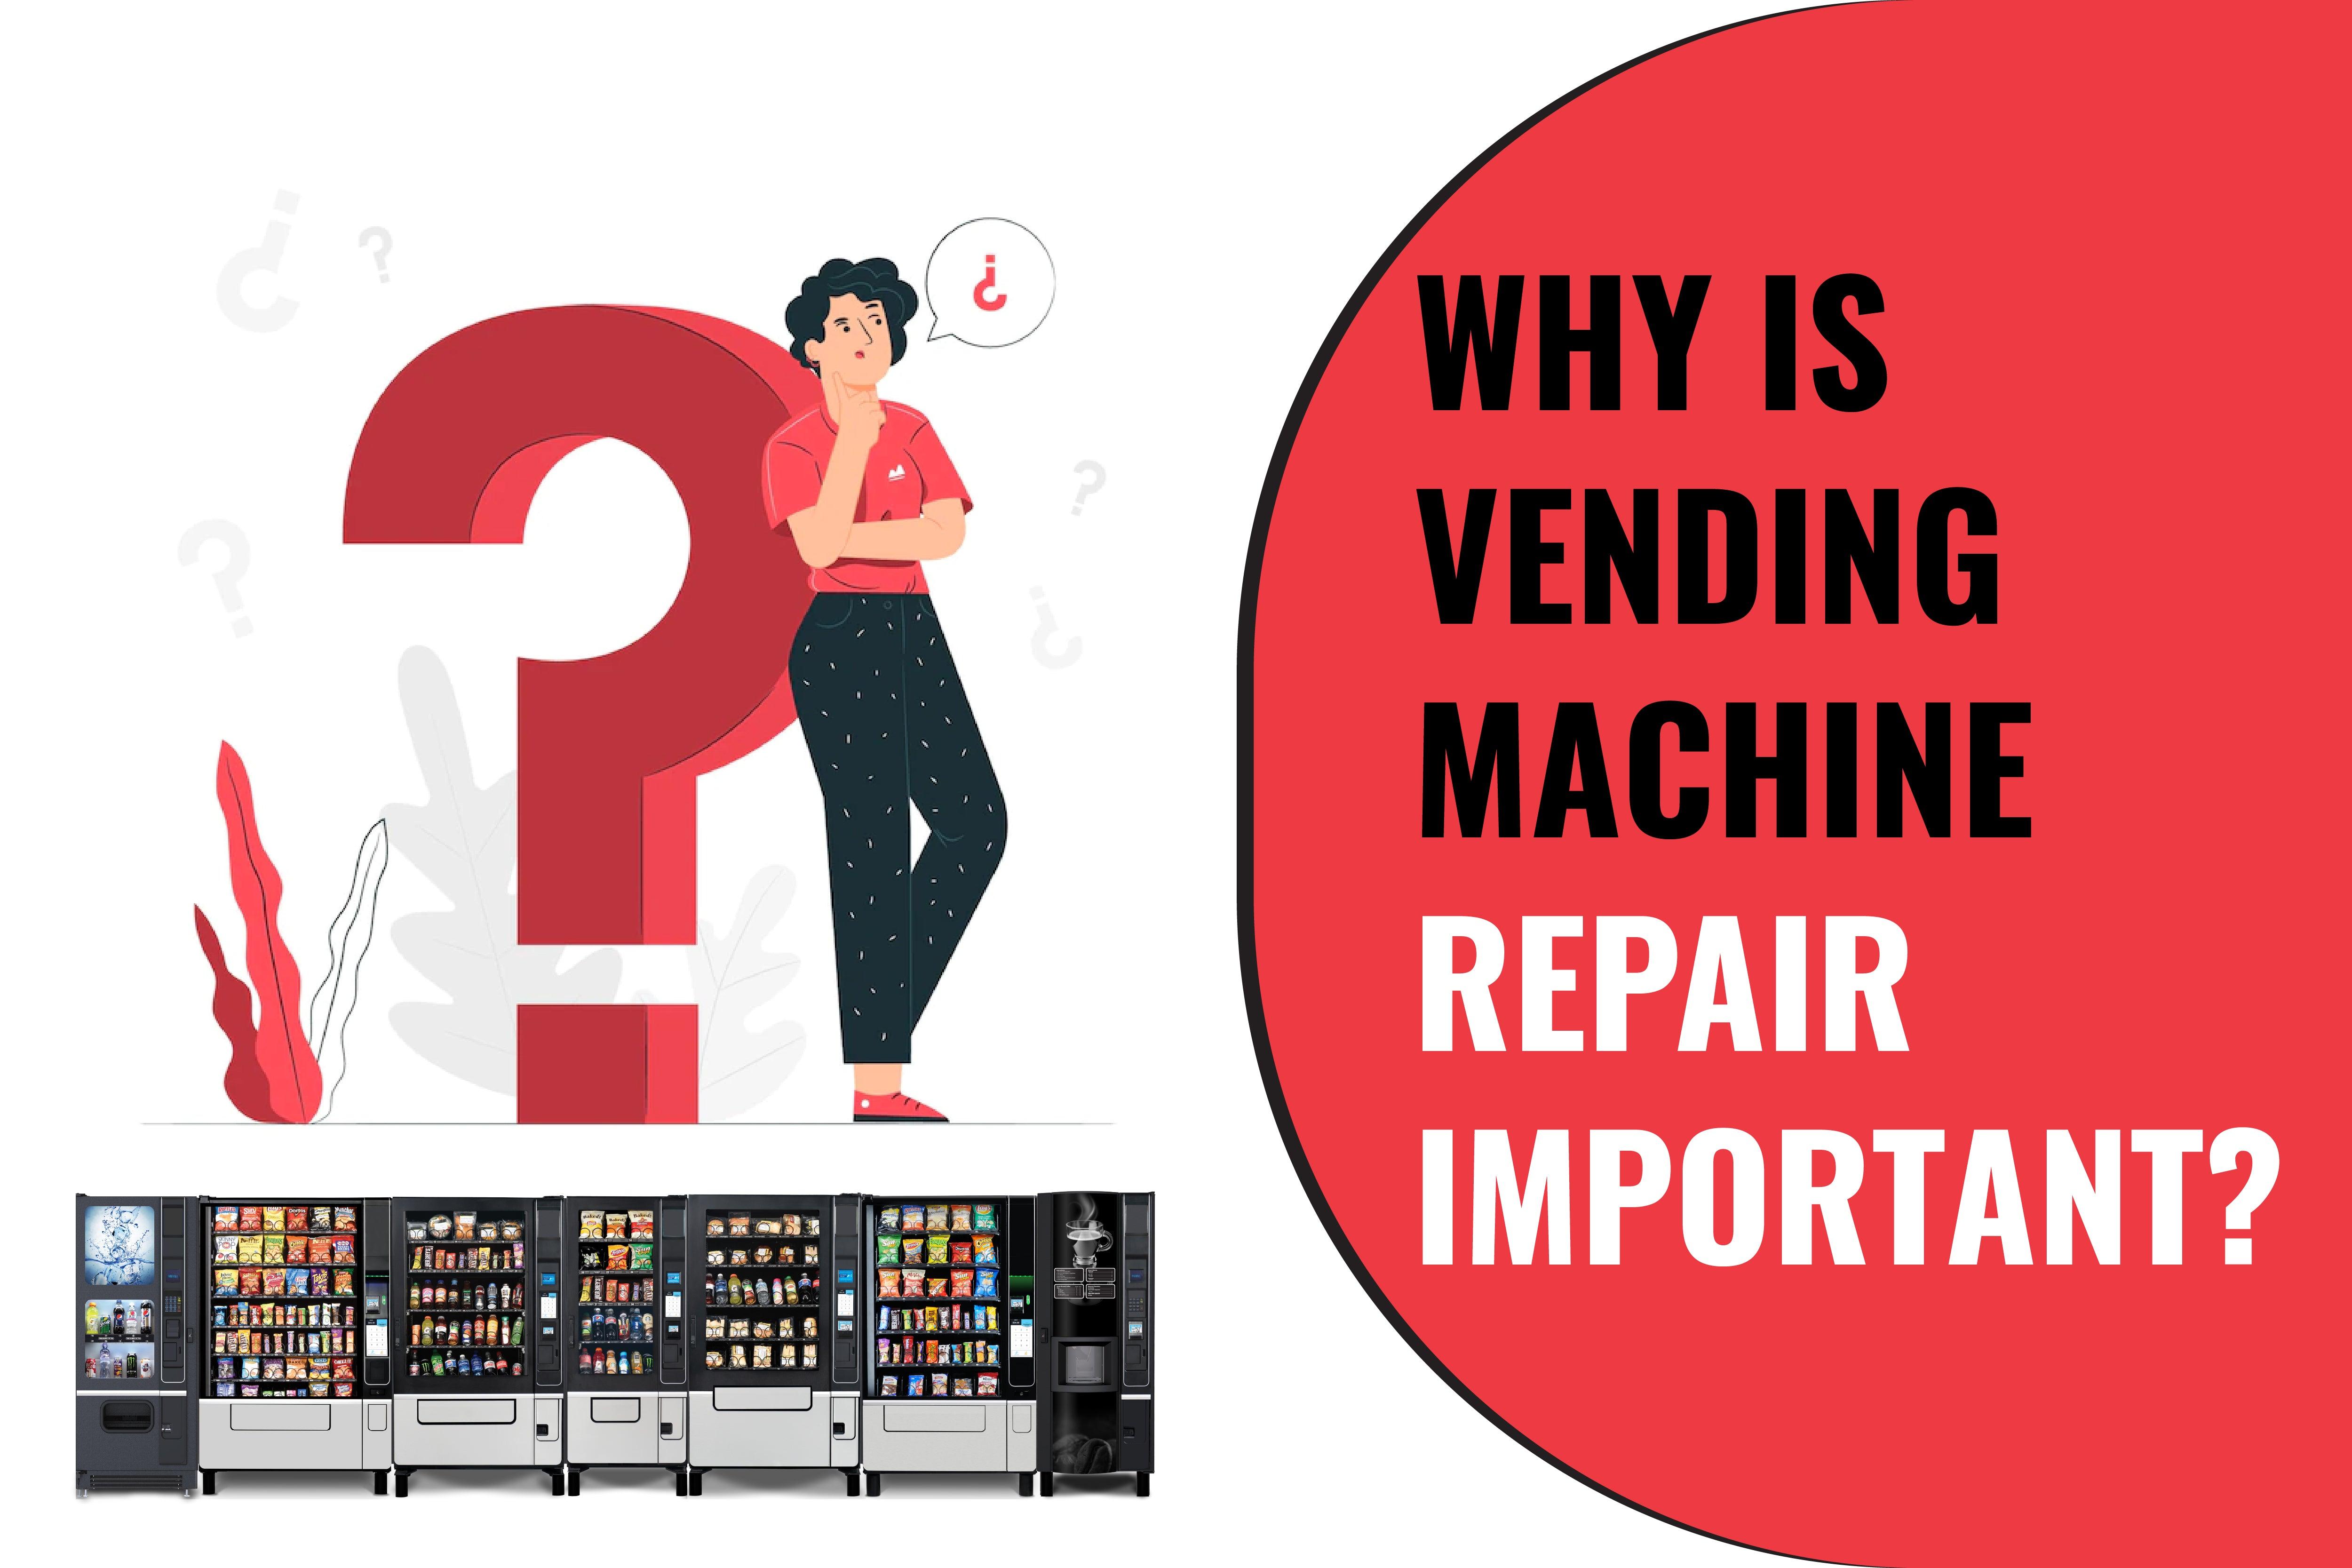 Vending Maintenance: Why is Vending Machine Repair Important? - Vendnet